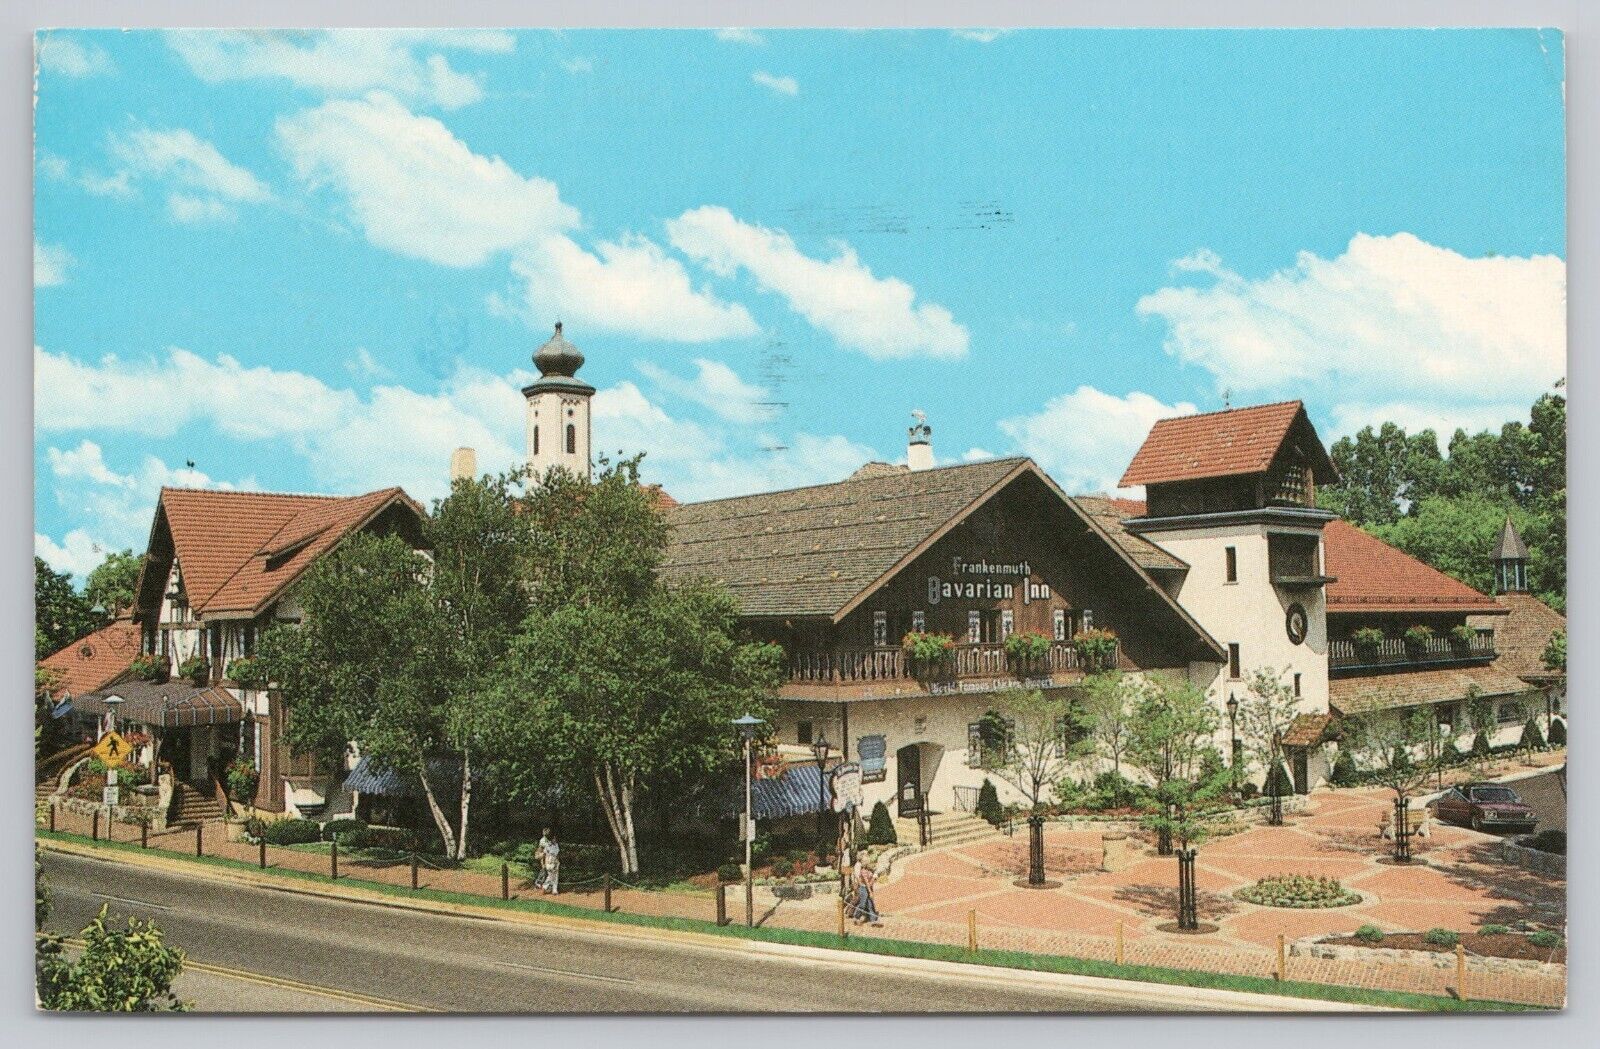 Frankenmuth Michigan, Bavarian Inn Advertising, Vintage Postcard